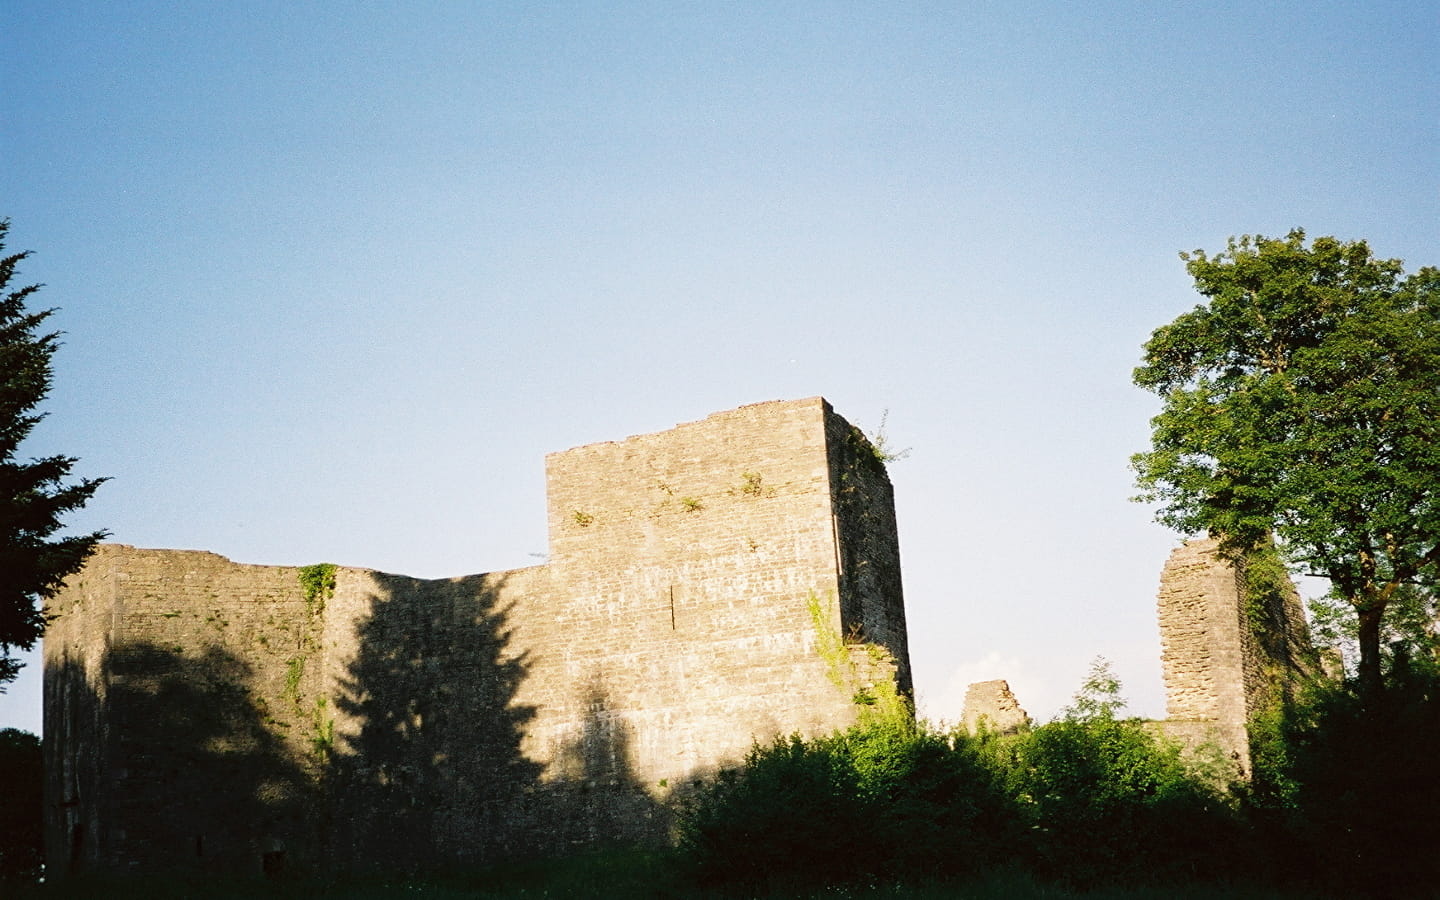 The castle of Présilly